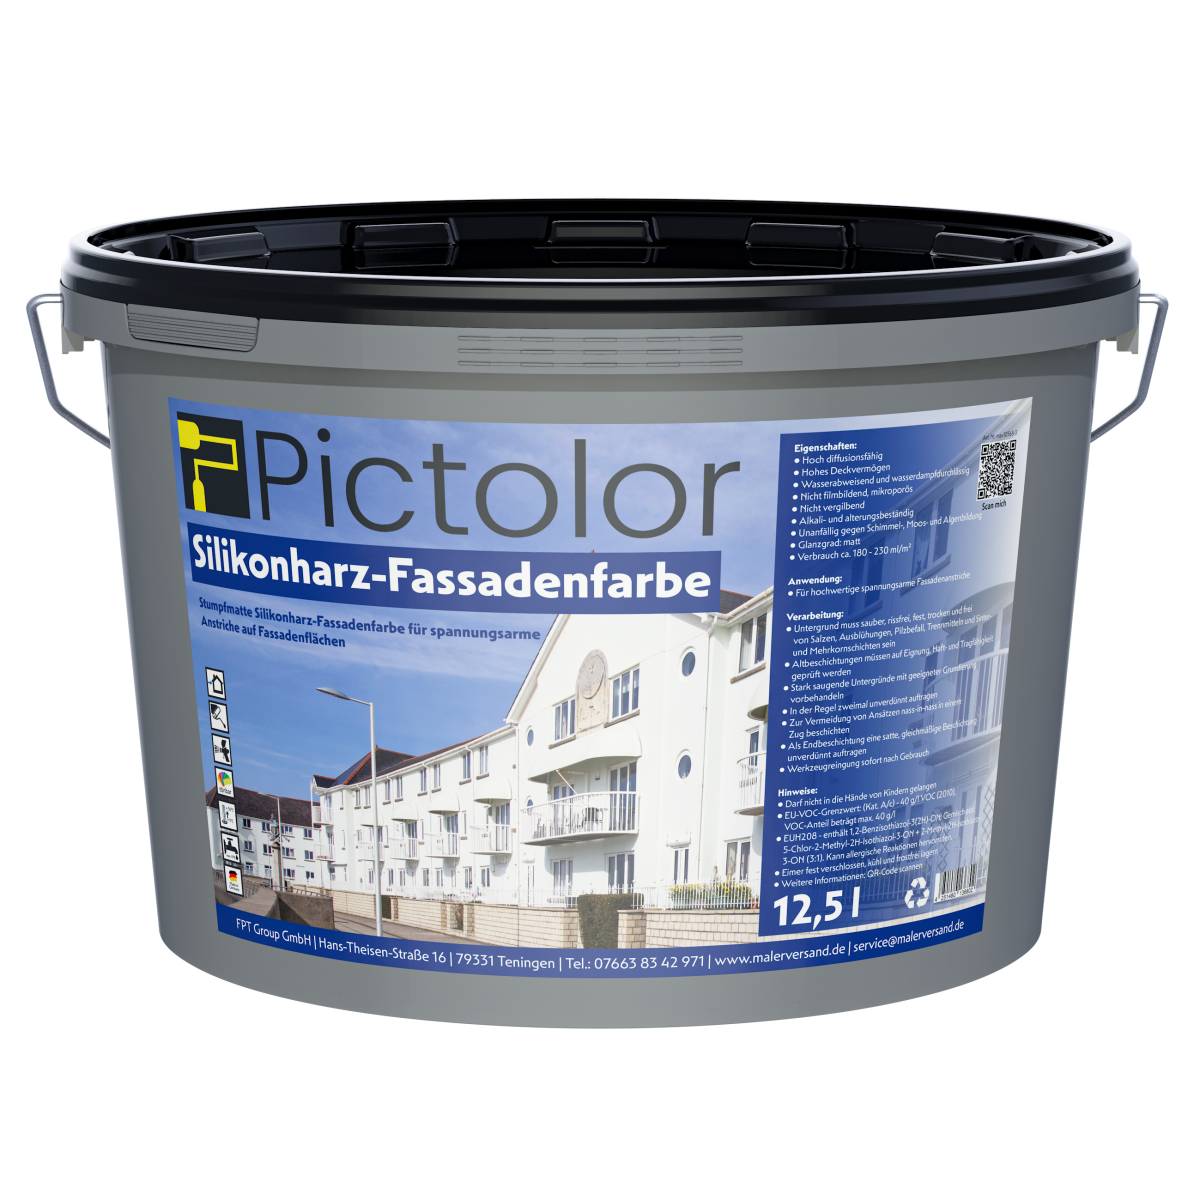 Pictolor® Silikonharz Fassadenfarbe von Pictolor